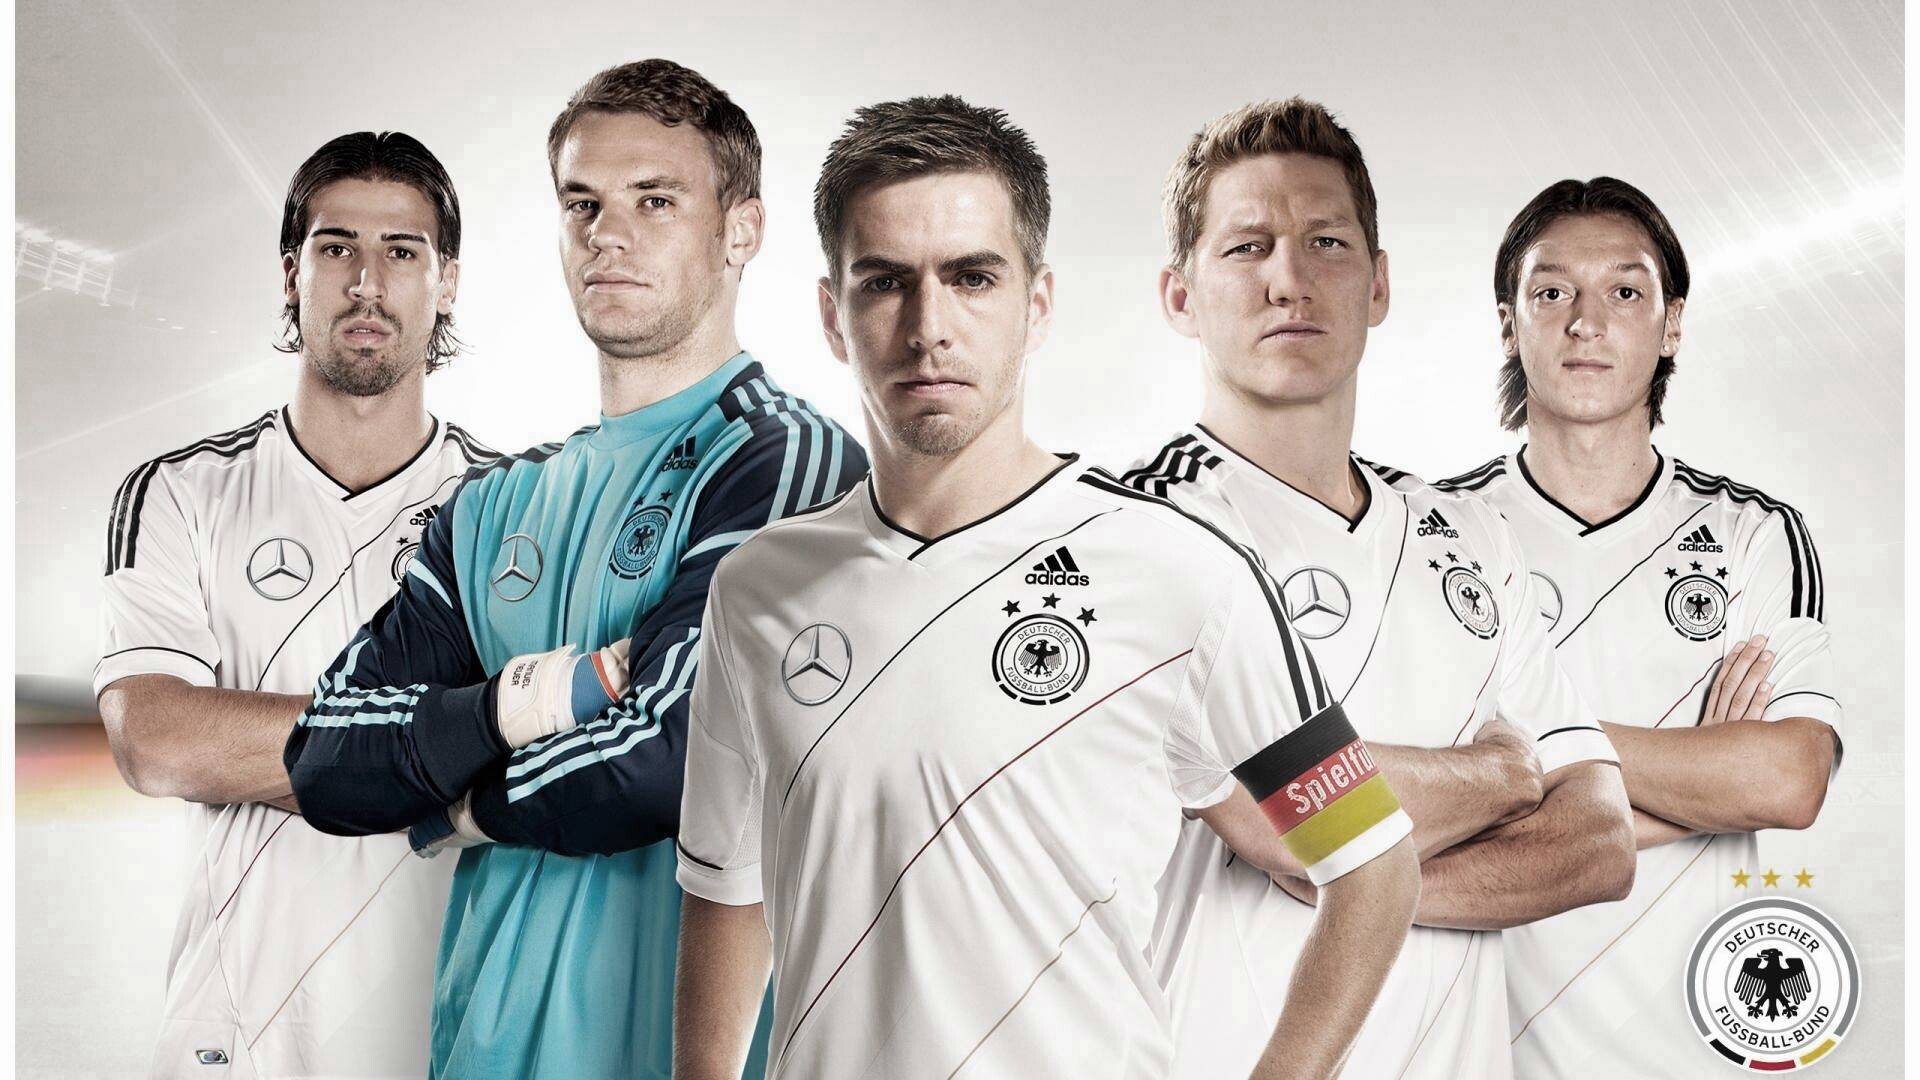 Germany Soccer Team: Sami Khedira, Manuel Neuer, Philipp Lahm - the captain, Bastian Schweinsteiger, Mesut Ozil. 1920x1080 Full HD Wallpaper.